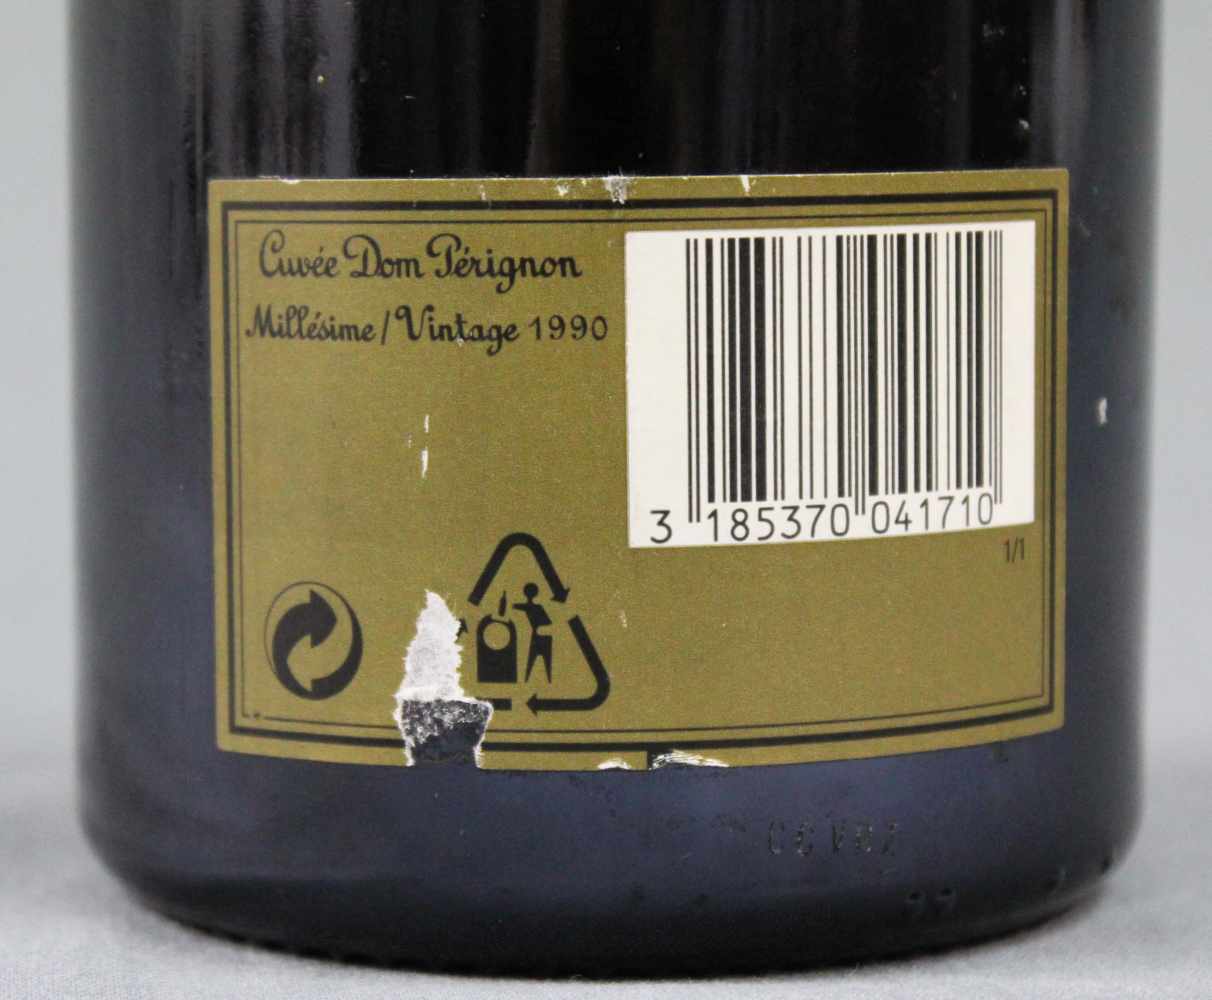 1990 Champagne. Cuvee Dom Perignon. Vintage.Moet et Chandon a Epernay. Fondee en 1743. Eine ganze - Image 4 of 8